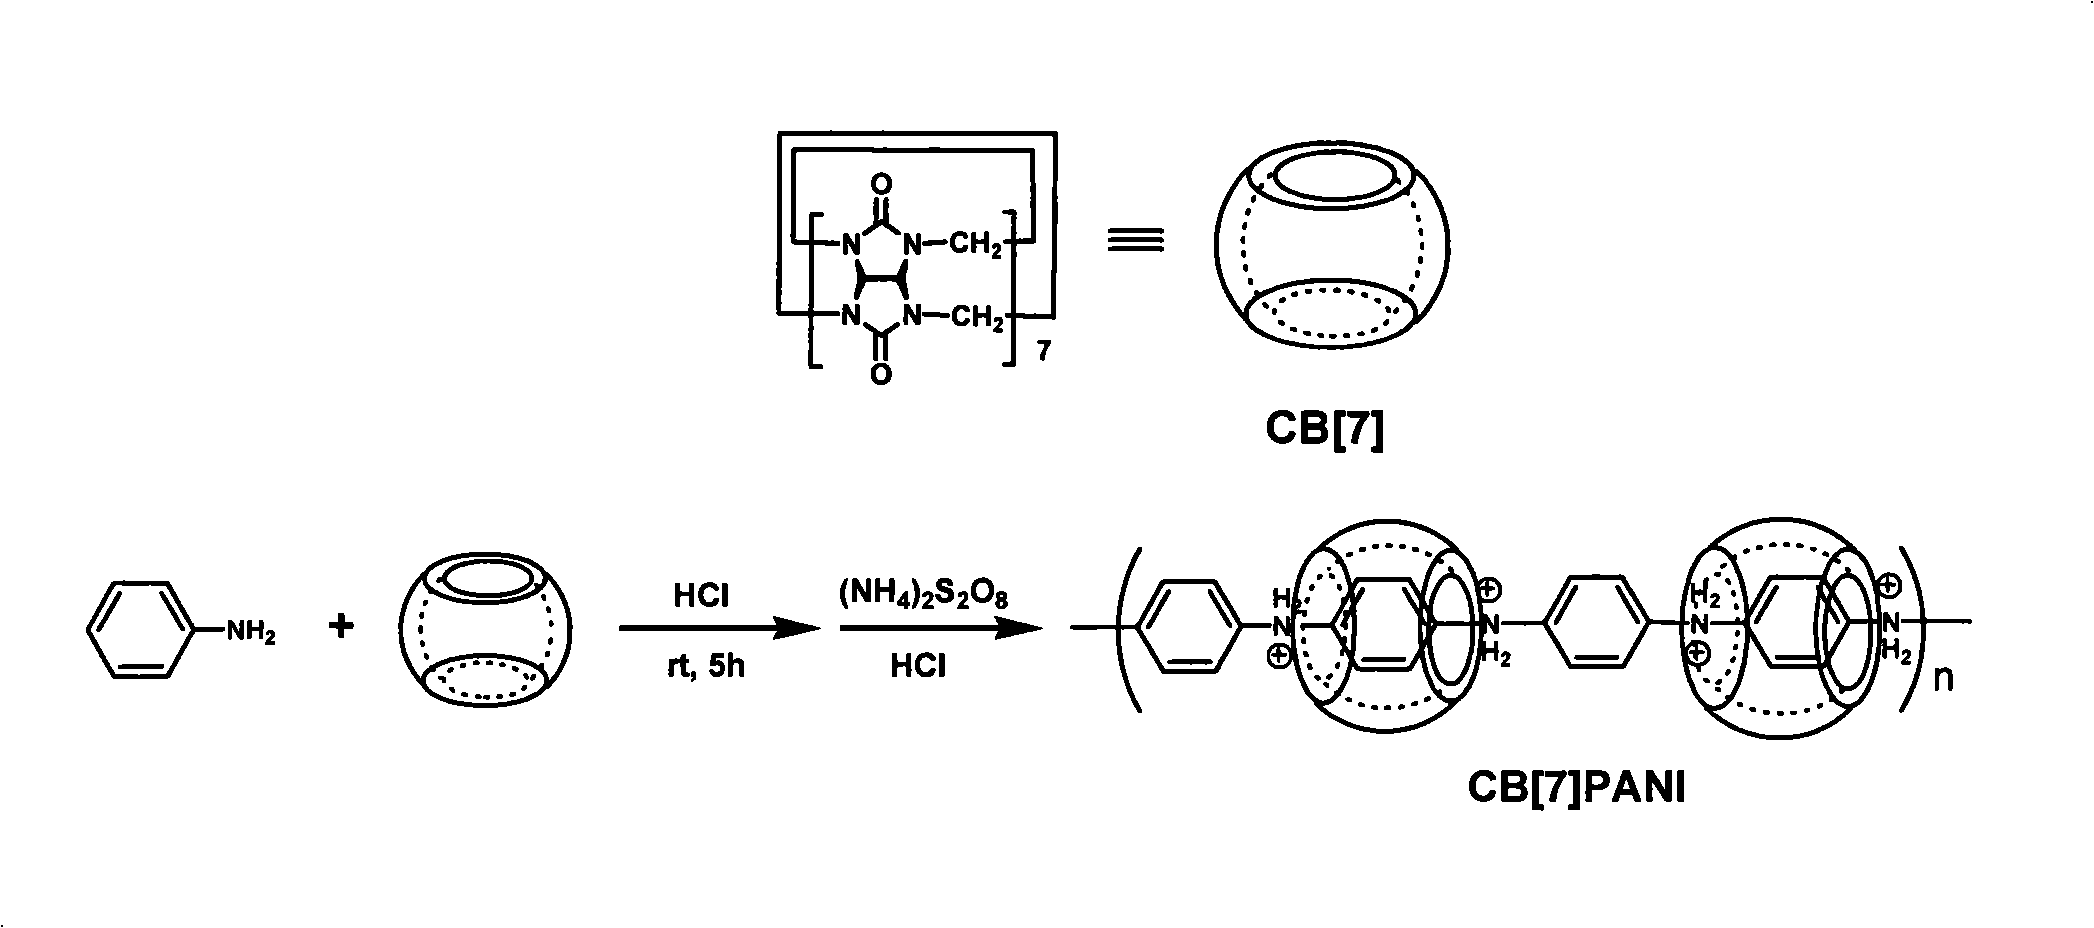 Calabash [7] carbamide aniline nano-supermolecule conducting polymer, method for preparing same and use